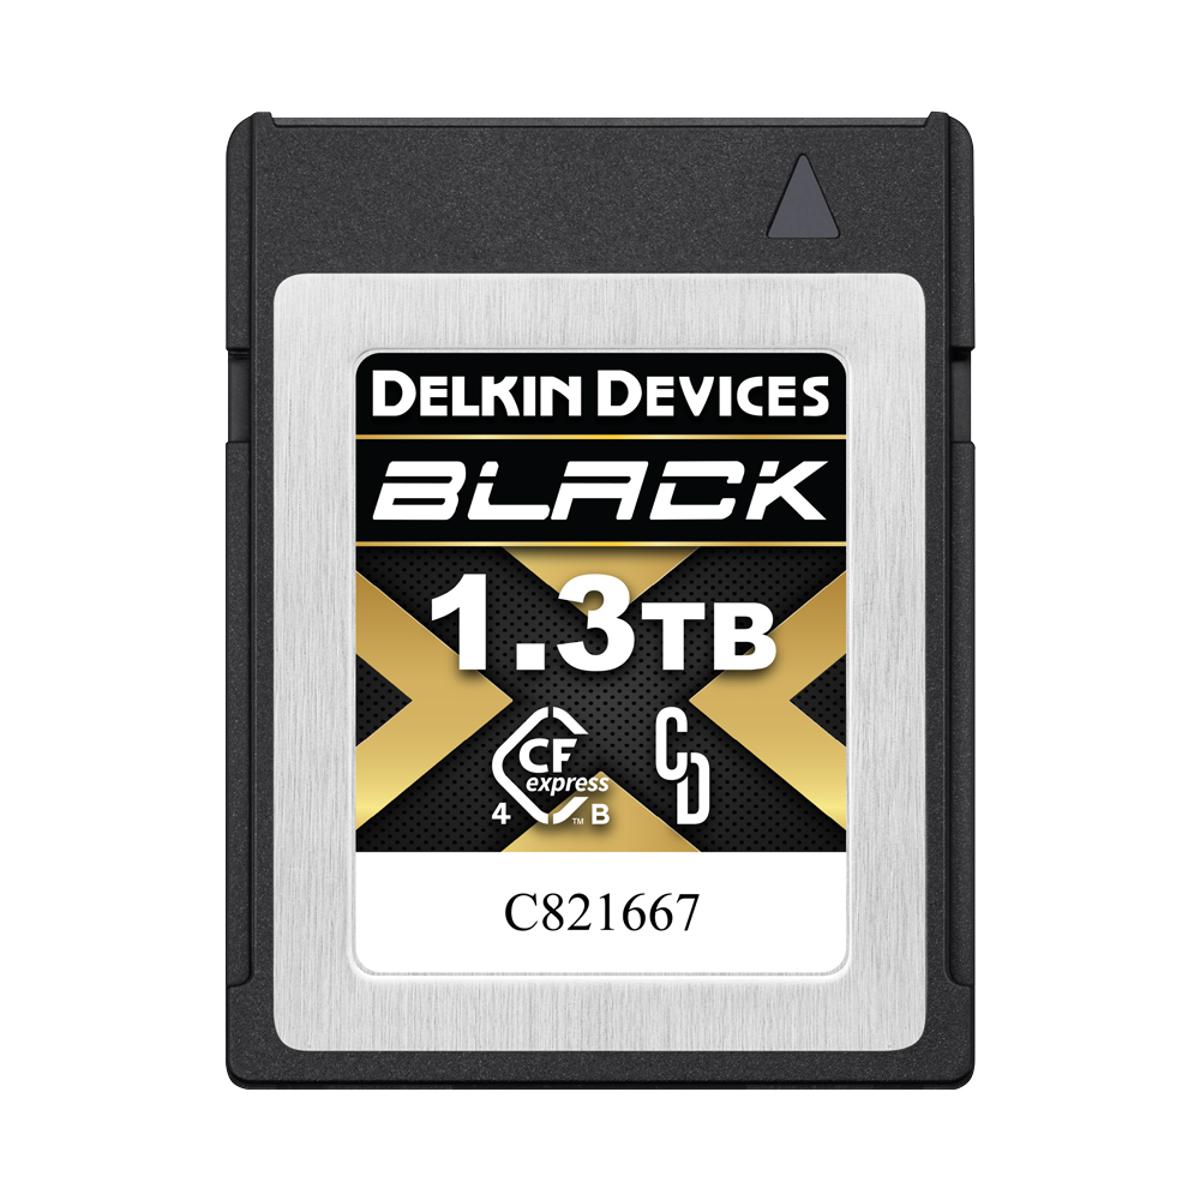 Delkin BLACK 1.3TB 4.0 CFexpress Type B Memory Card